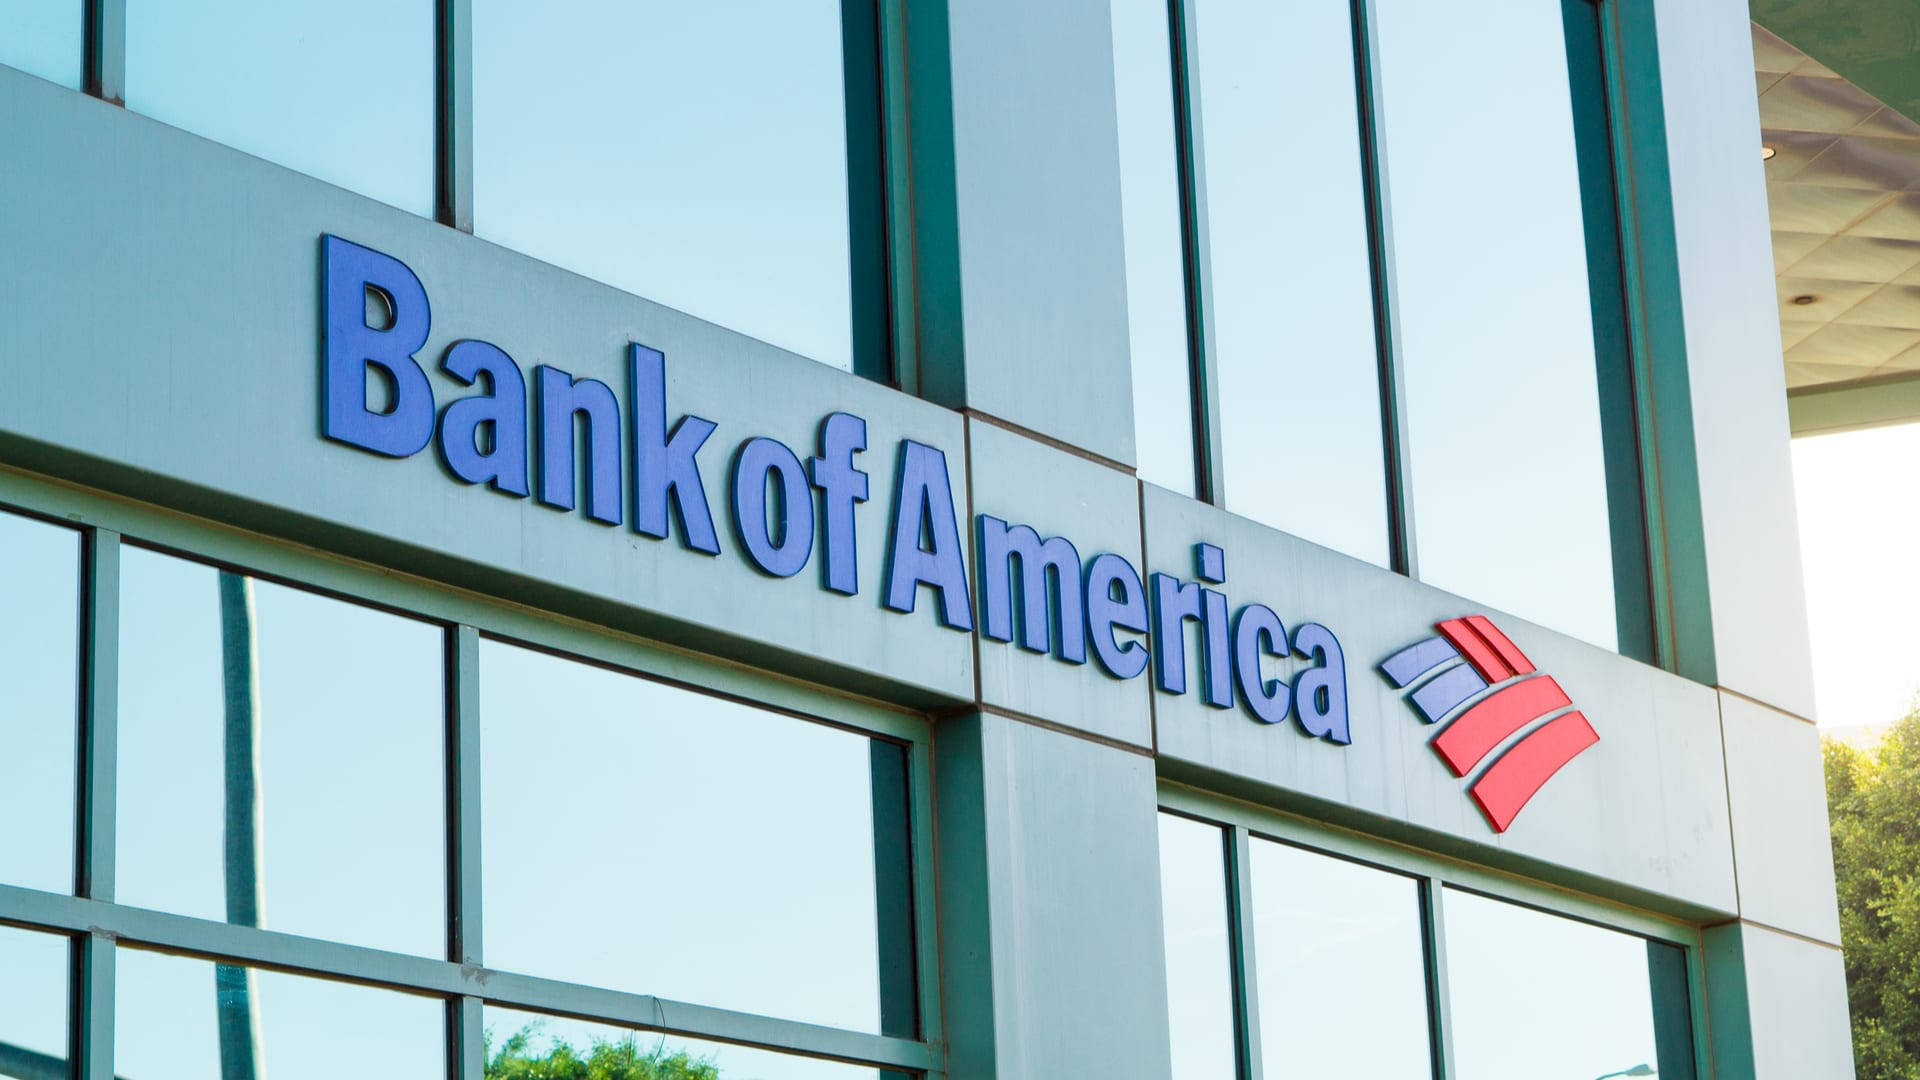 Bright Bank Of America Signage